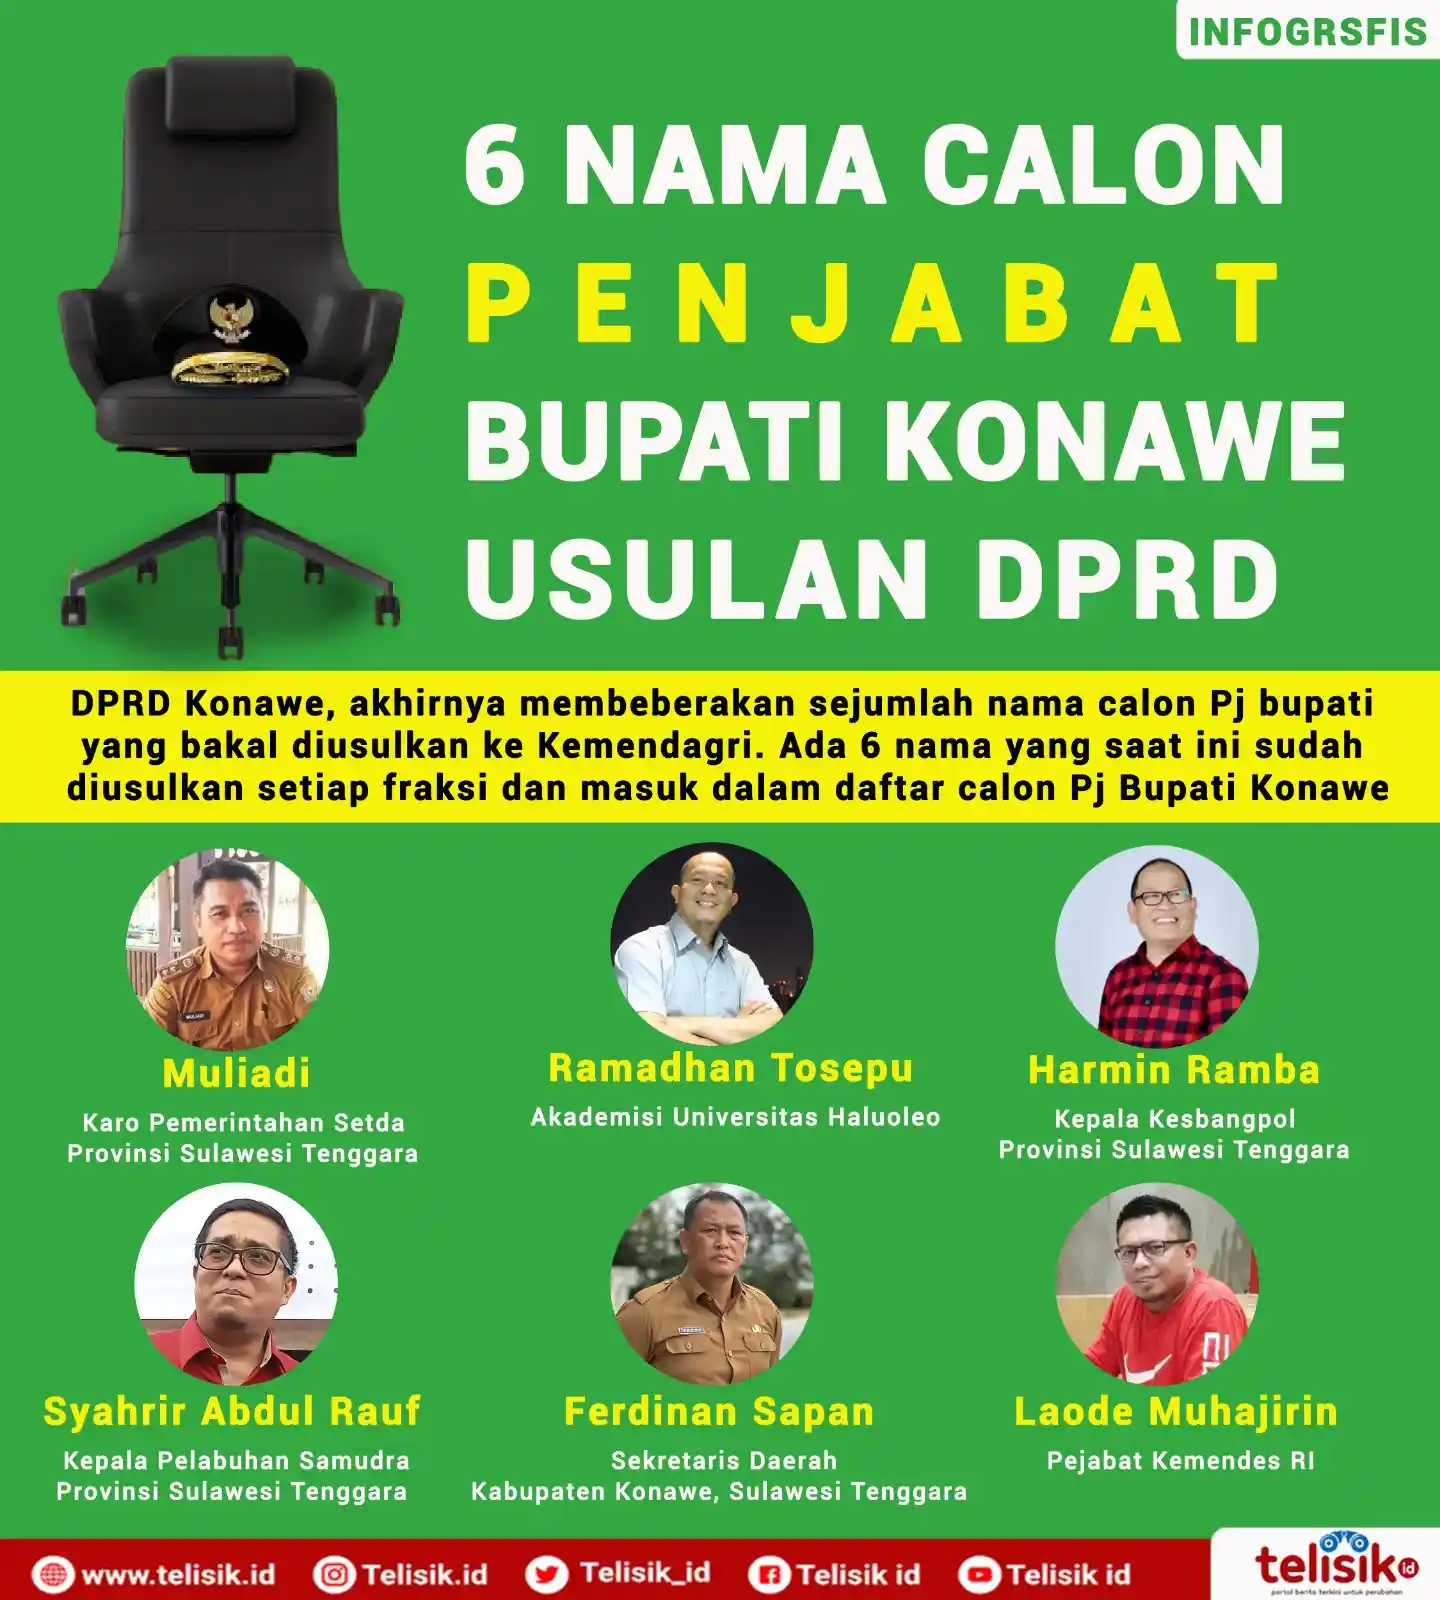 Infografis: 6 Calon Pj Bupati Konawe Usulan DPRD 